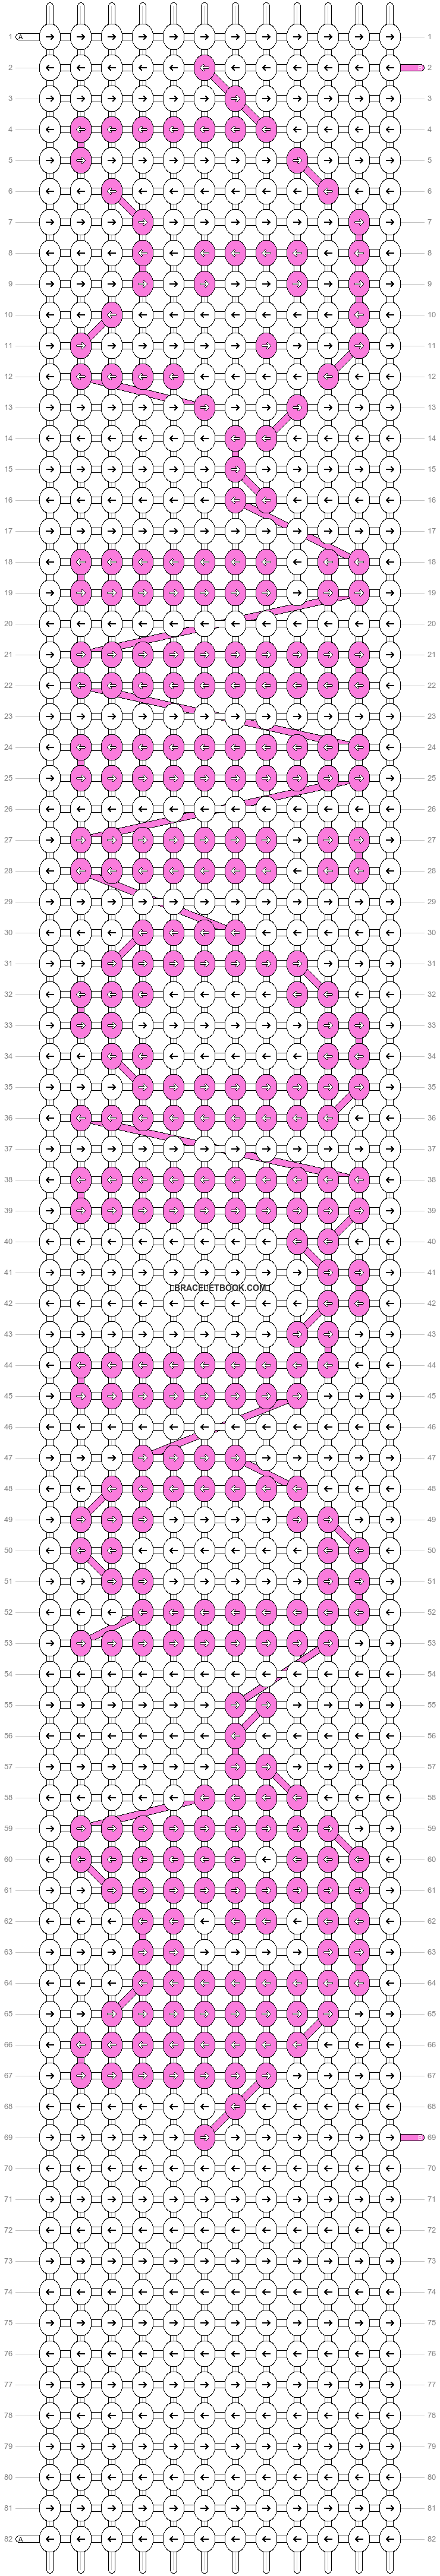 Alpha pattern #1866 pattern